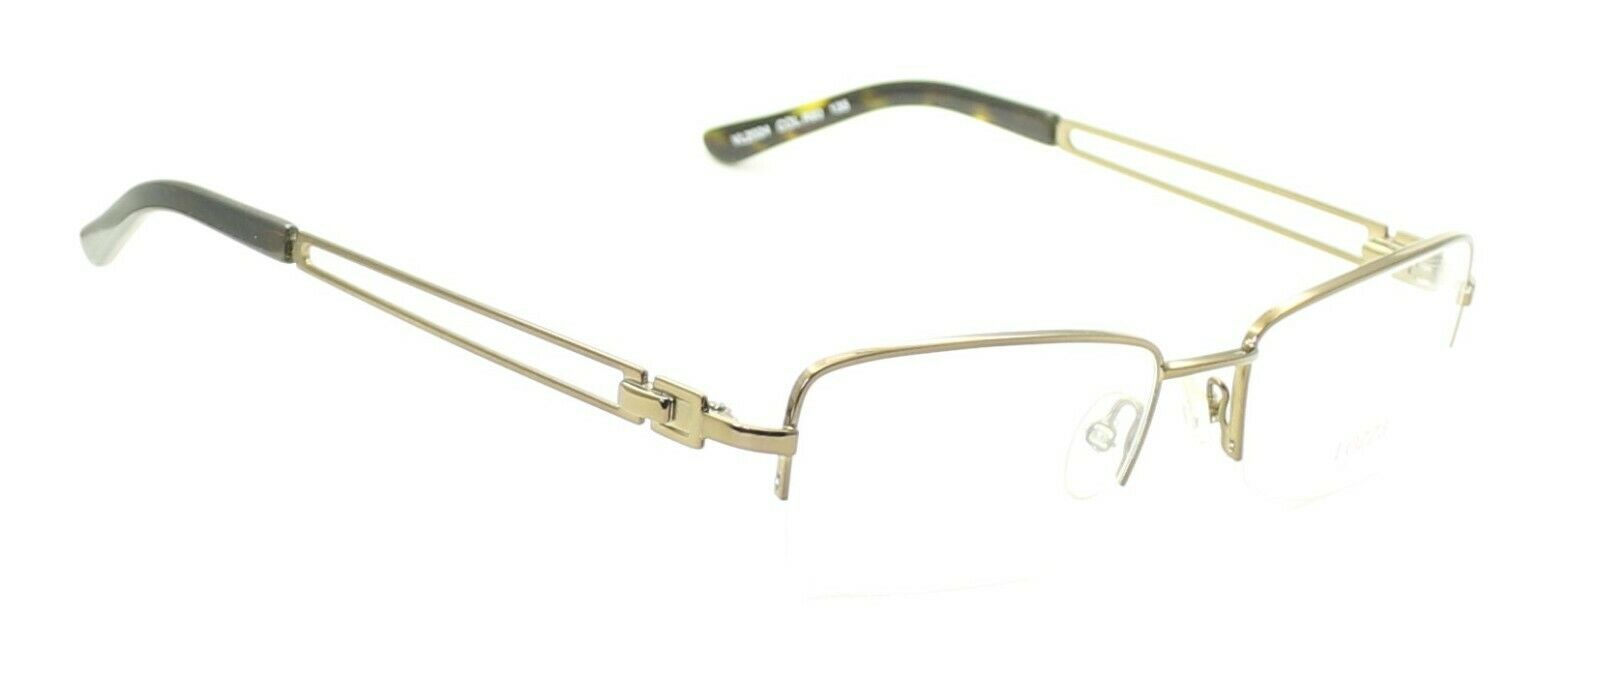 LOZZA VL2024 COL. R80 51mm Eyewear FRAMES RX Optical Eyeglasses Glasses - New